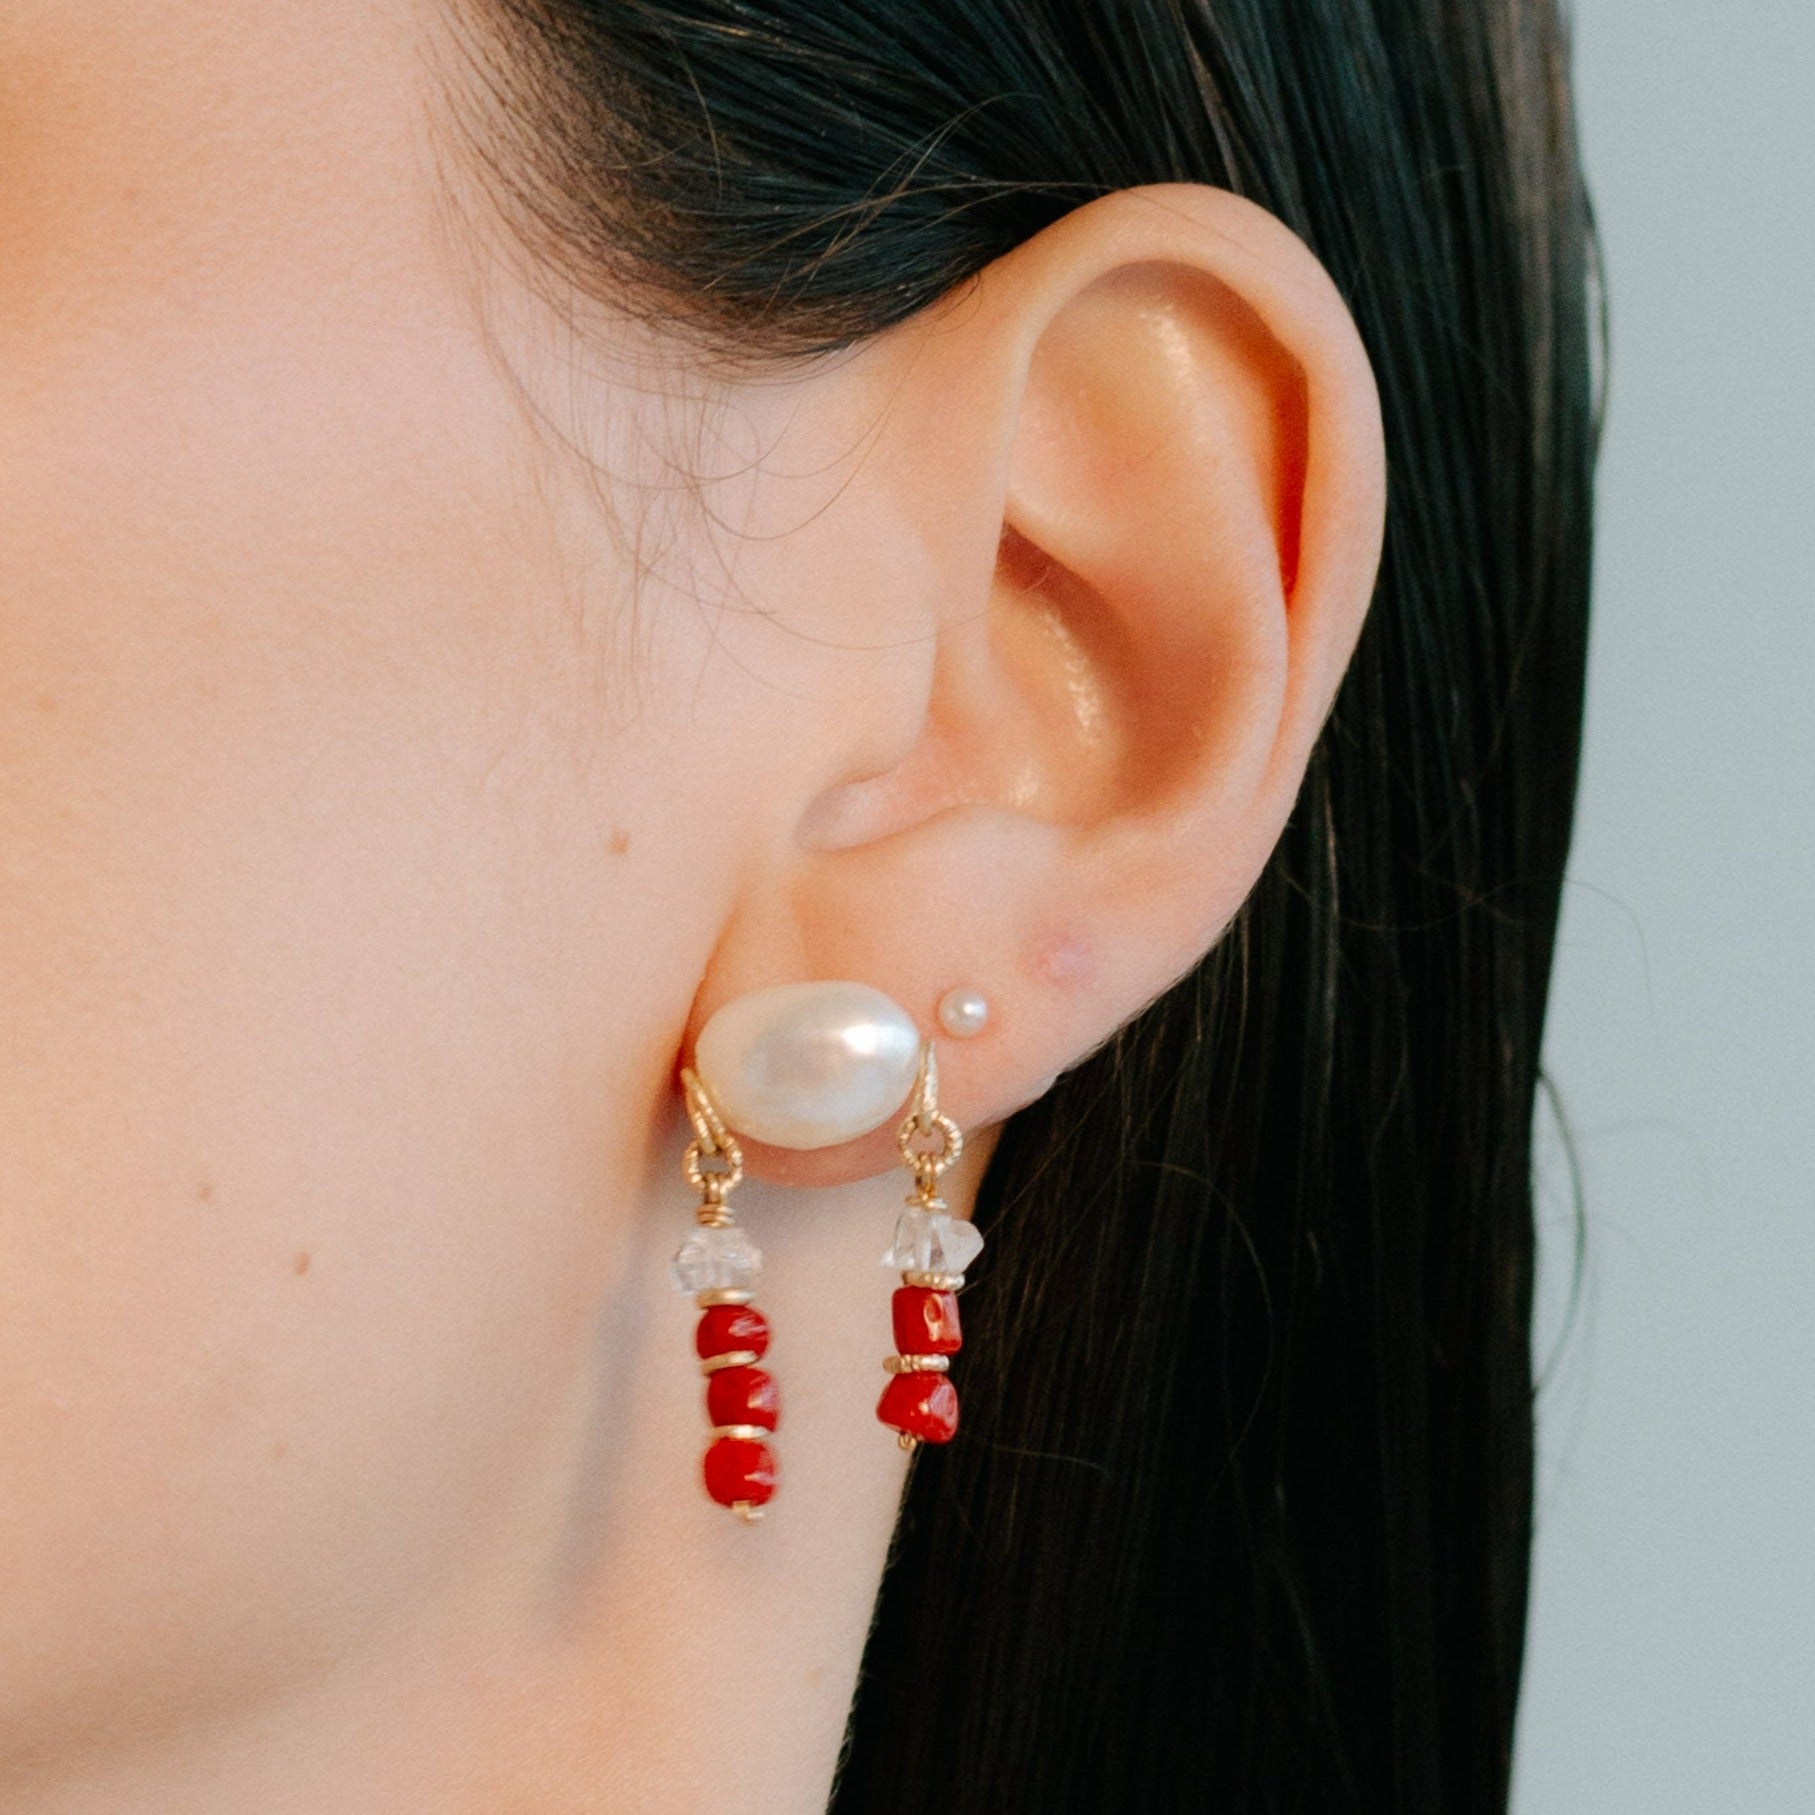 Koralli Dangle Earrings #3 (30mm) - Red Coral Earrings TARBAY   